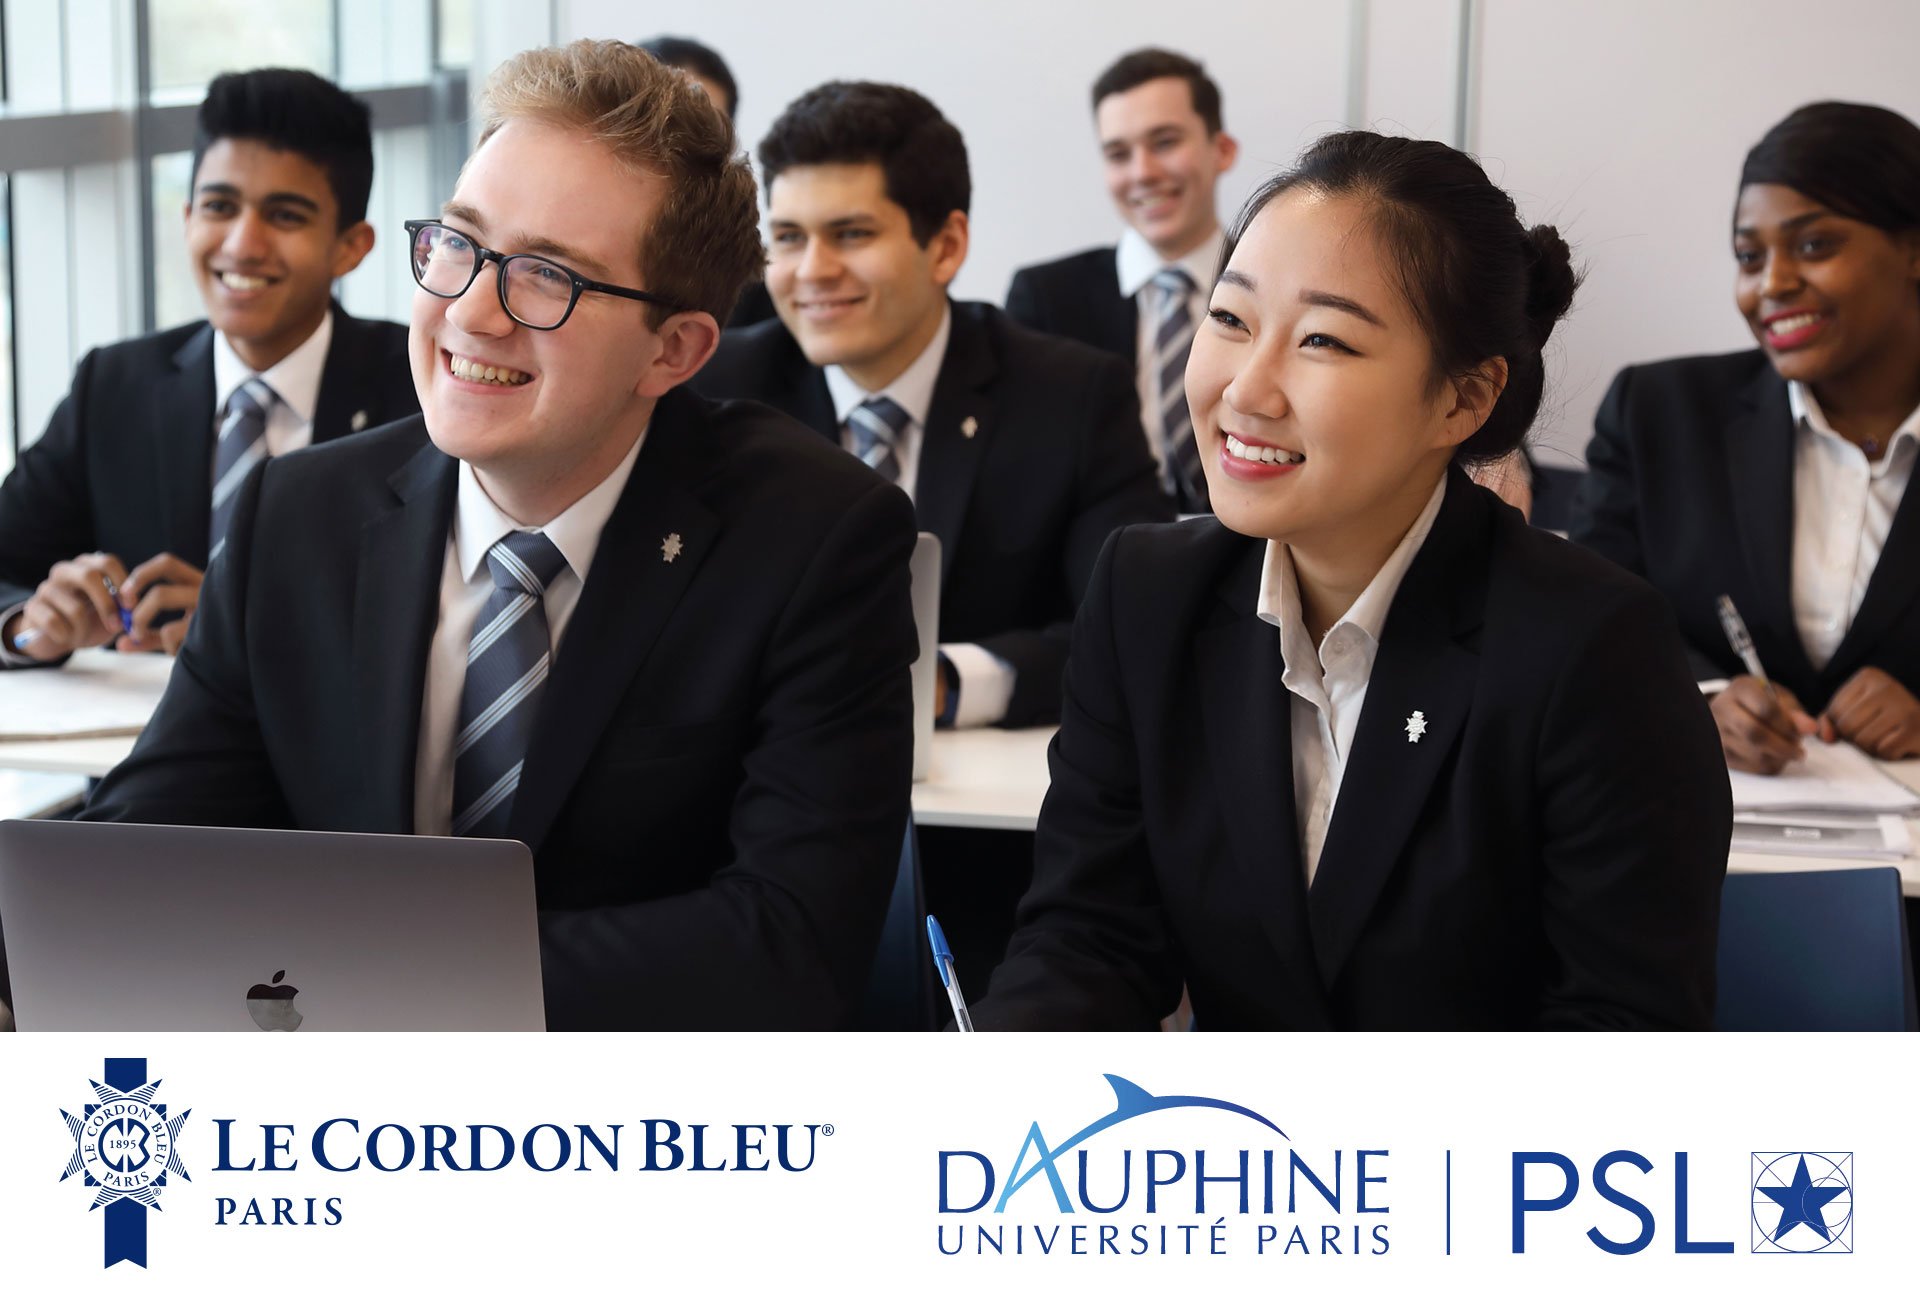 Le Cordon Bleu Paris and Paris-Dauphine University: train future gastronomy and hospitality managers